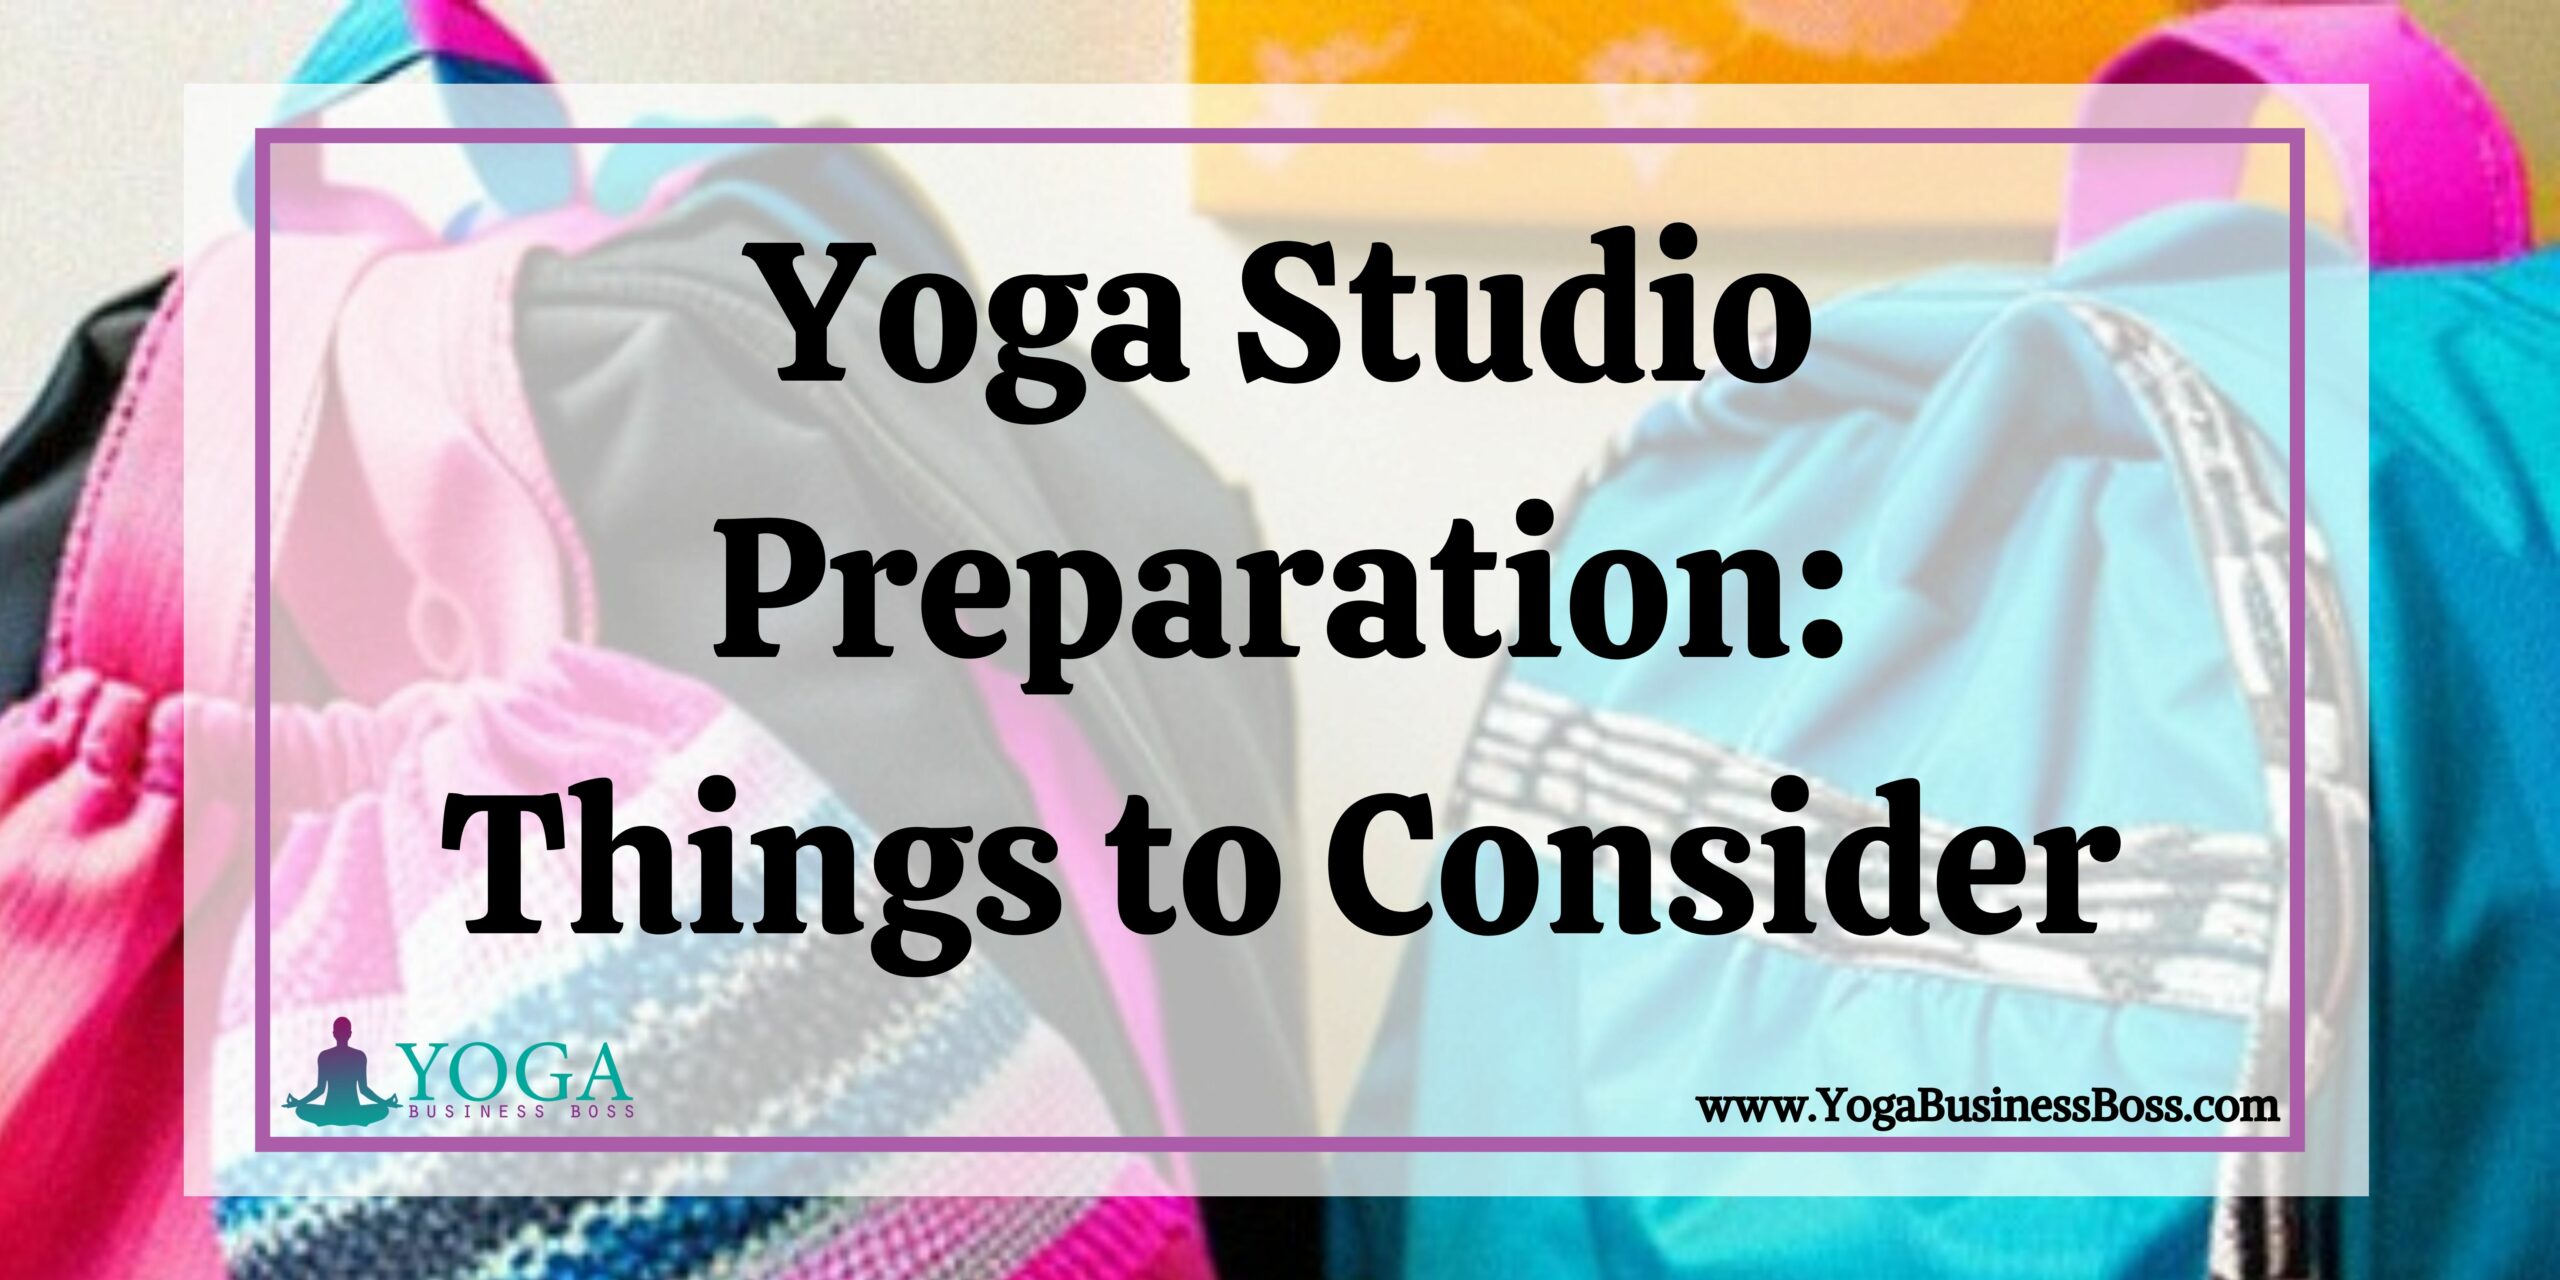 Yoga Studio Preparation: Things to Consider - Yoga Business Boss